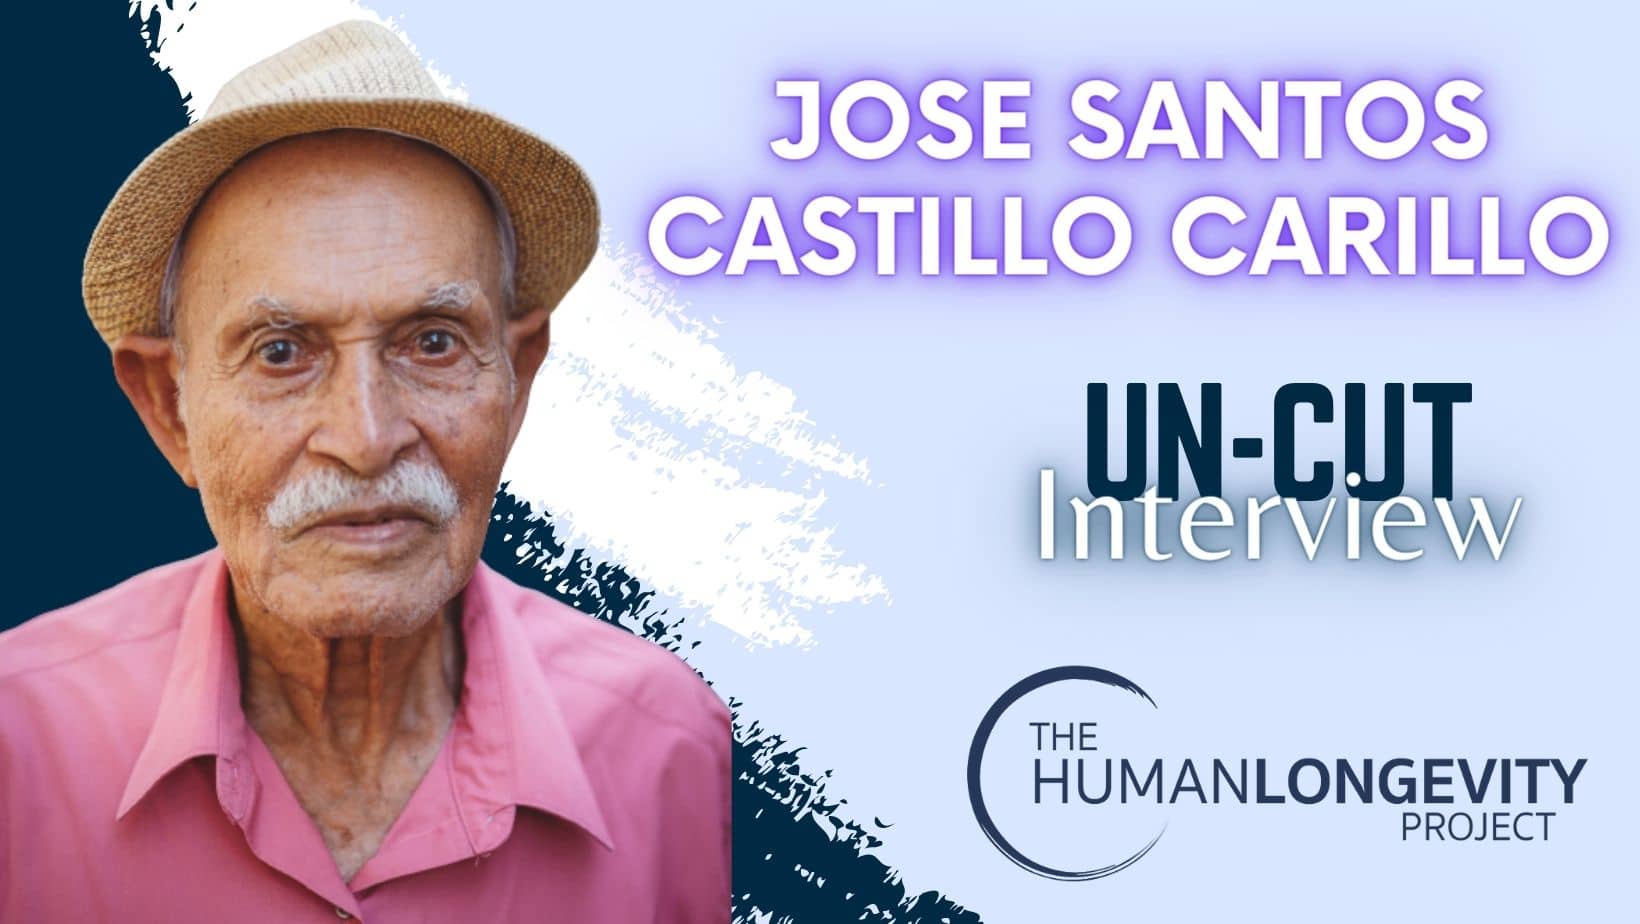 Human Longevity Project Uncut Interview With Jose Santos Castillo Carillo